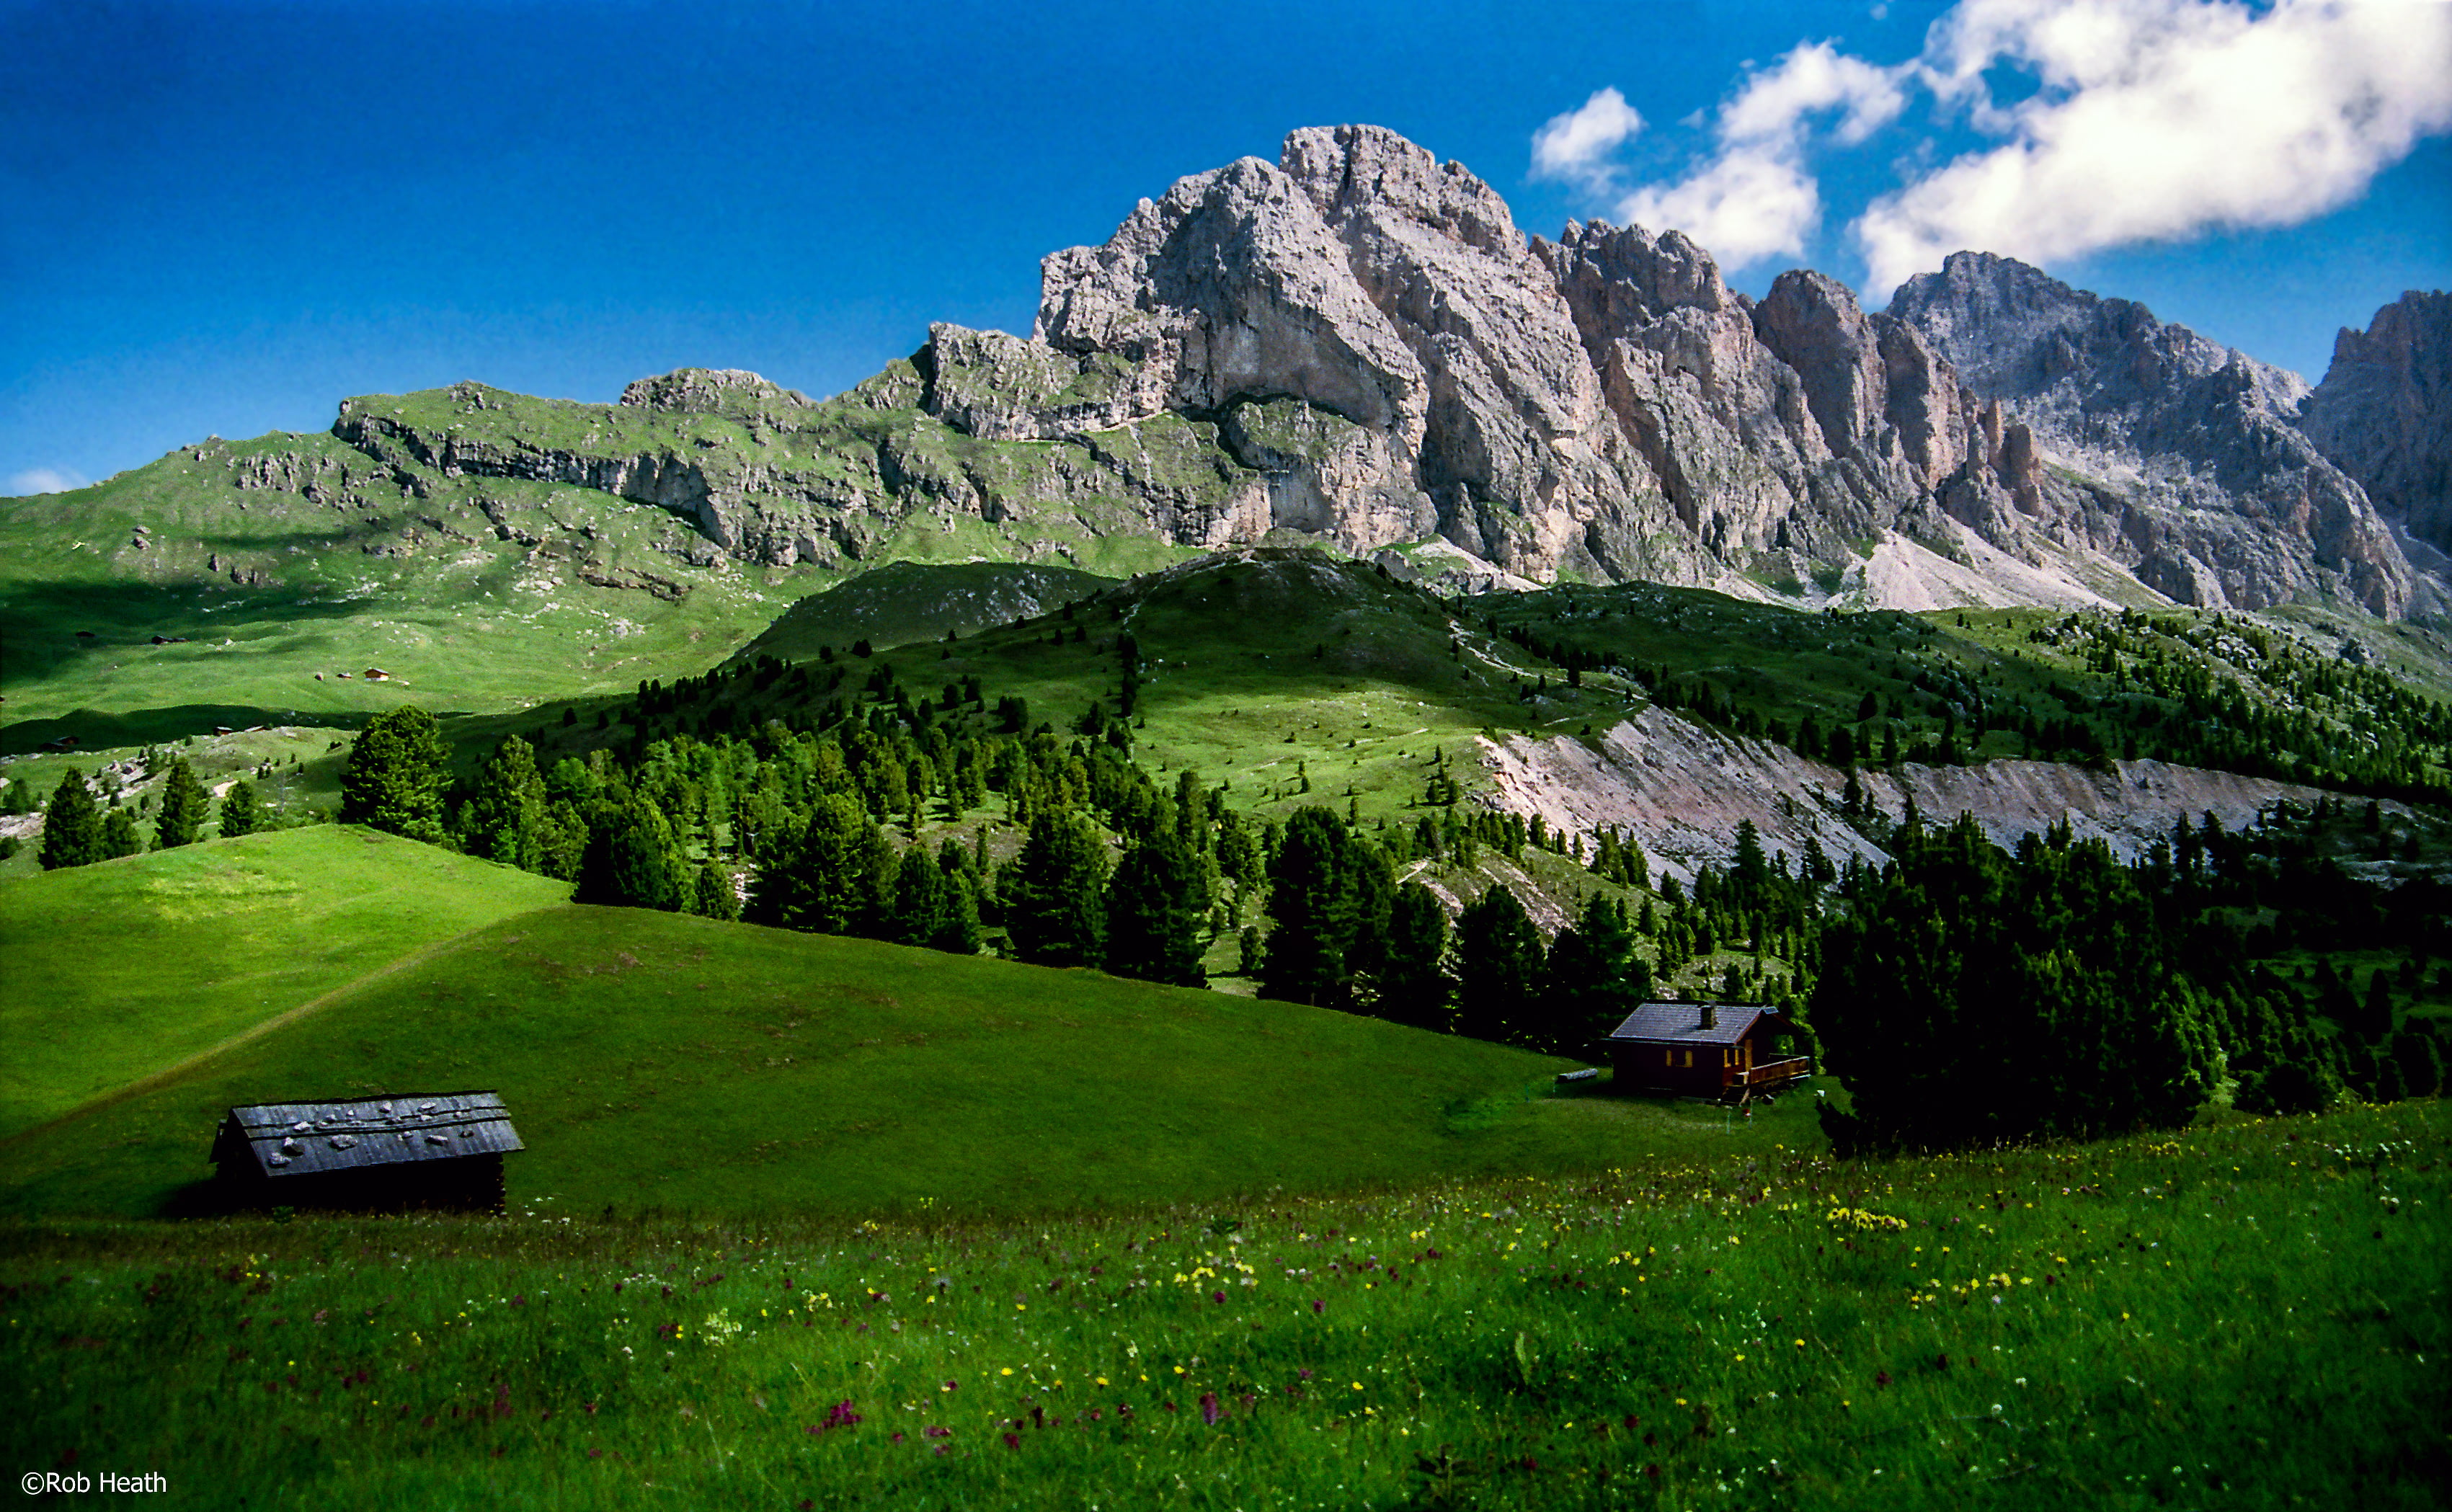 Landscape photo of a mountain near grass field, italian dolomites